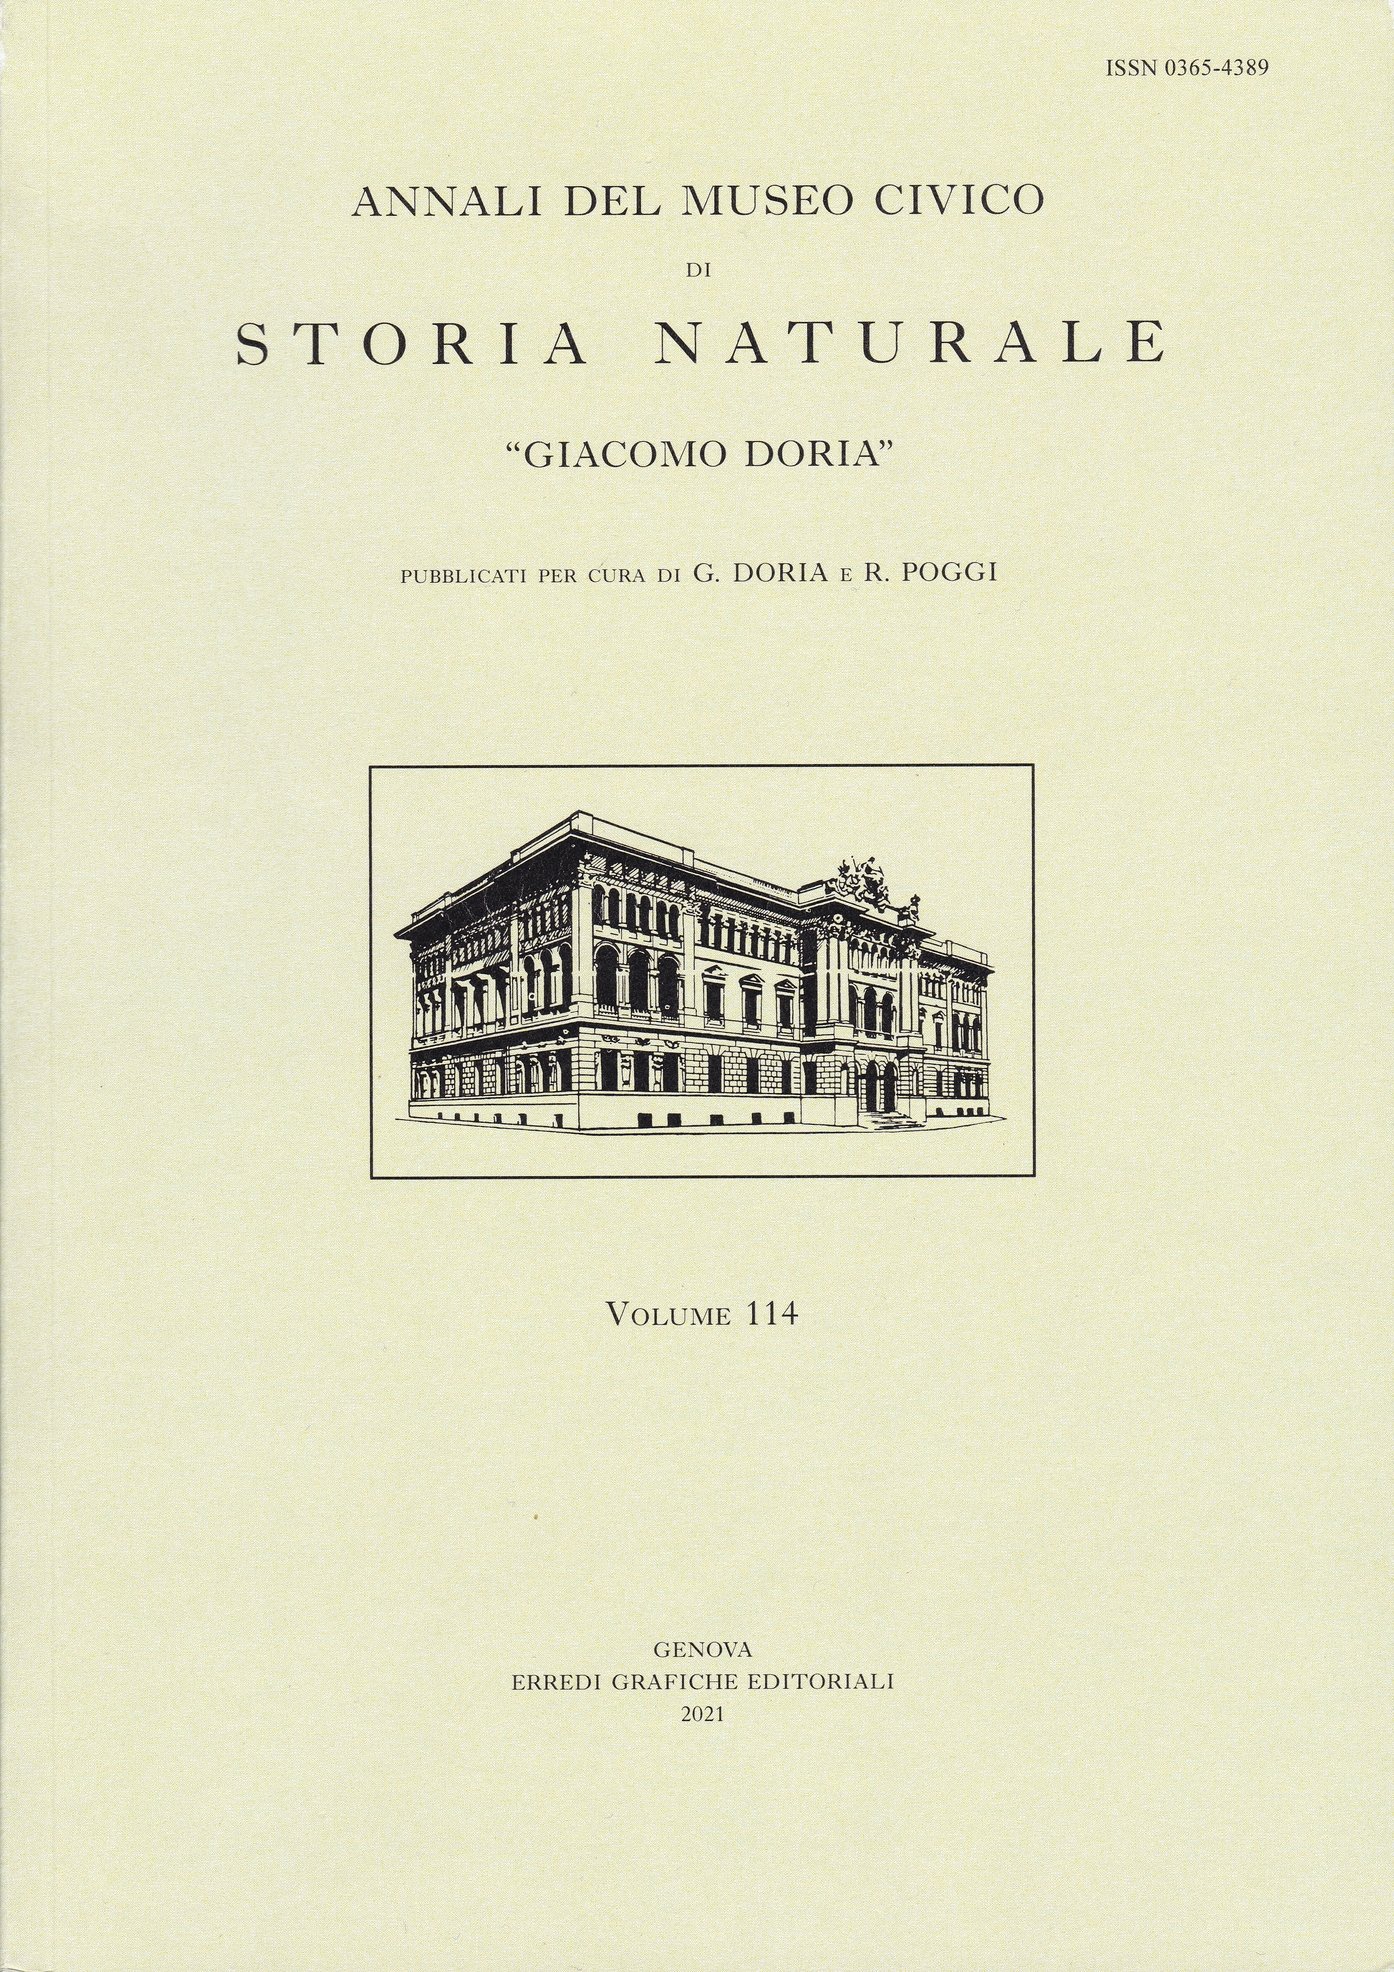 Annali del Museo Civico di Storia Naturale "Giacomo Doria" 2021/114. évf. (Rippl-Rónai Múzeum CC BY-NC-ND)